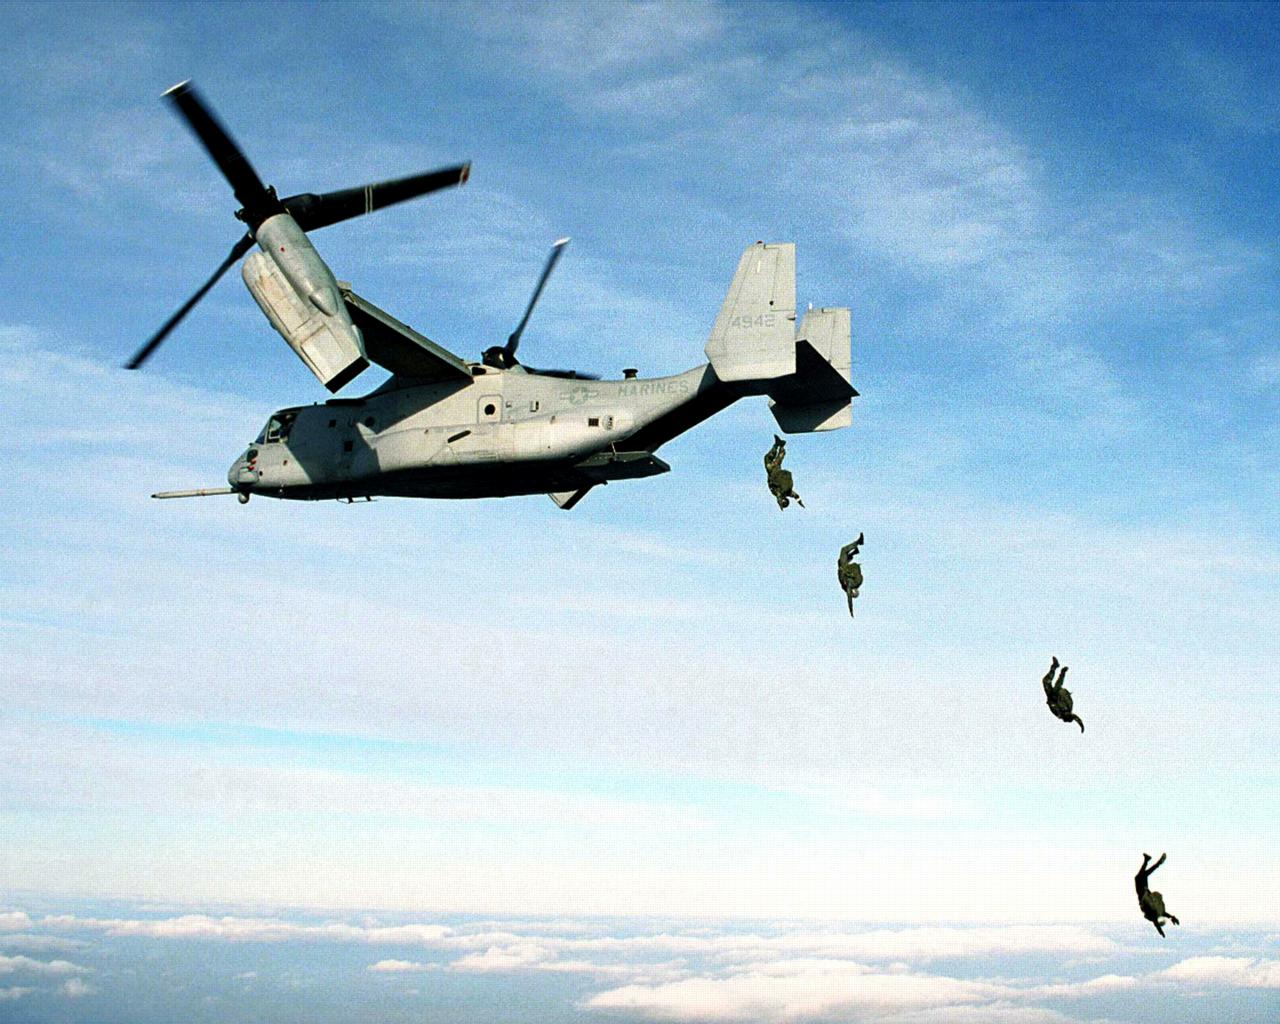 U.S. Marine Corps parachutists free fall<br />from an MV-22 Osprey at 10,000 feet wallpaper